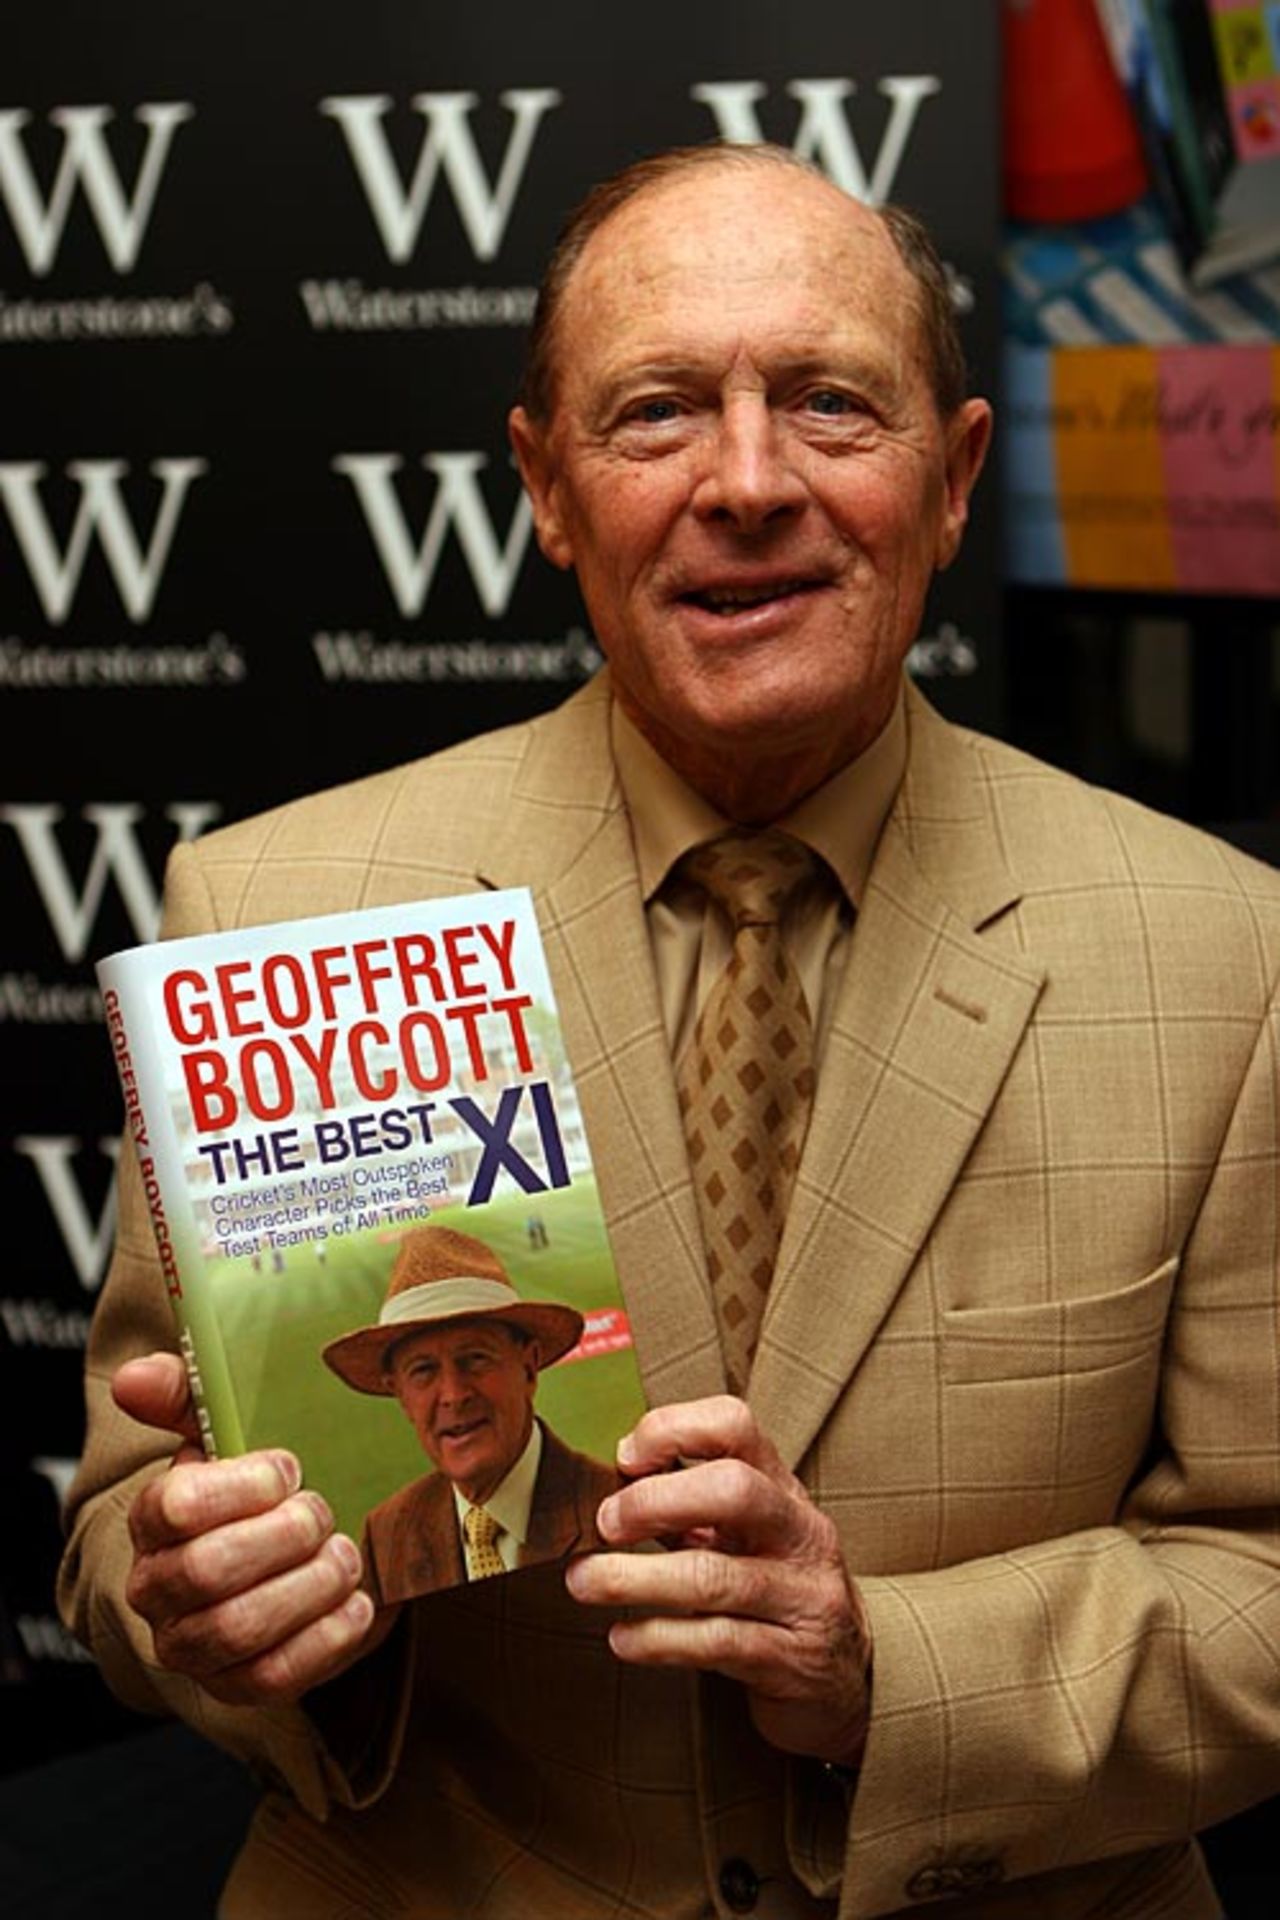 Geoffrey Boycott at a book signing for his book <i>Geoffrey Boycott: The Best XI</i>, London, September 1, 2008